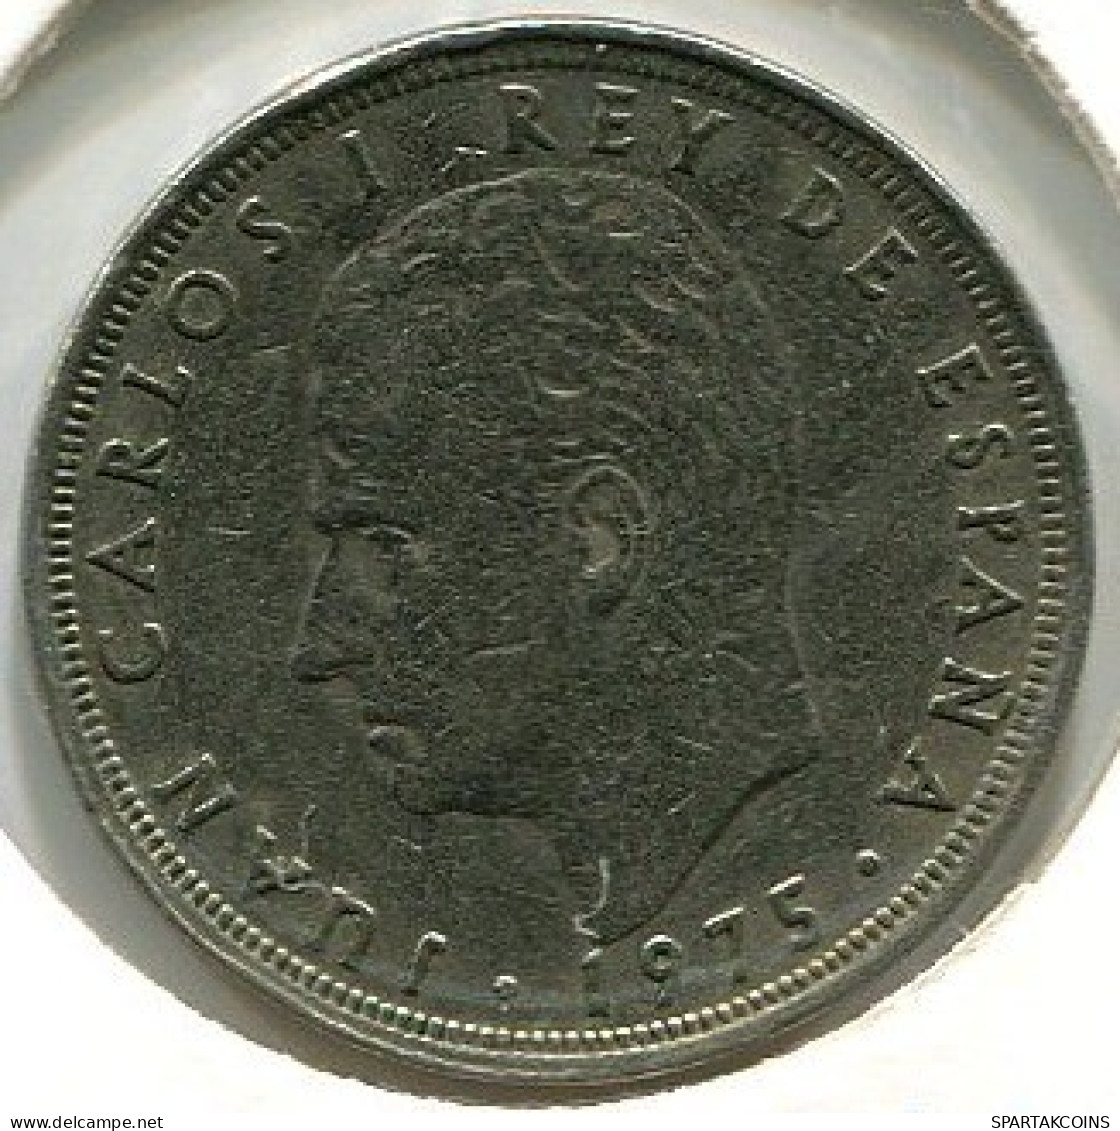 25 PESETAS 1975 SPAIN Coin #W10542.2.U.A - 25 Peseta